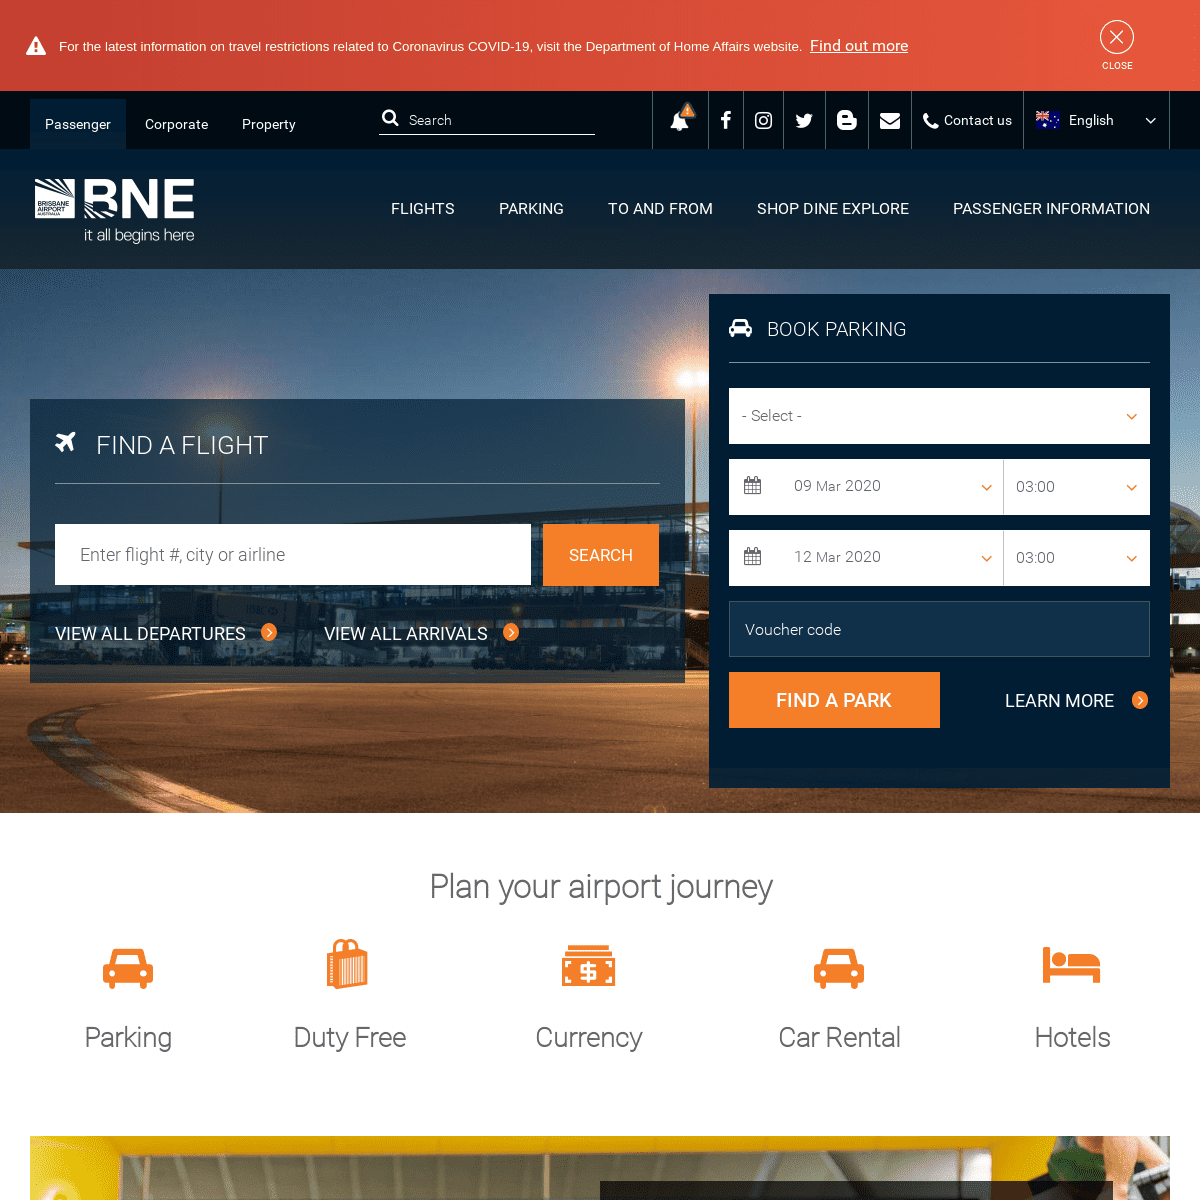 A complete backup of bne.com.au